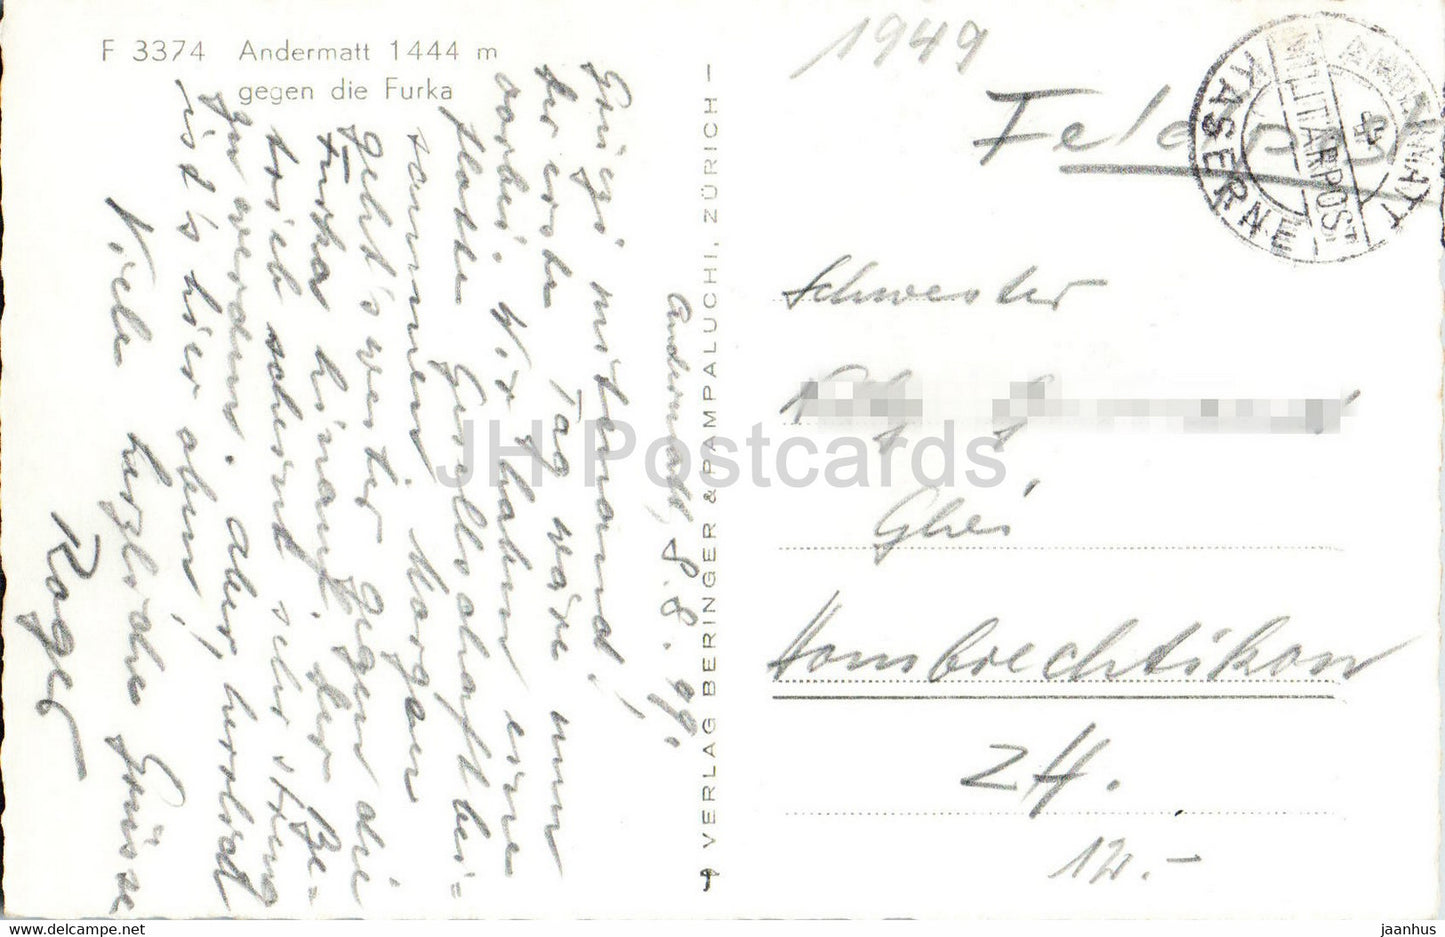 Andermatt 1444 m gegen die Furka - military mail - Feldpost - 3374 - old postcard - 1941 - Switzerland - used